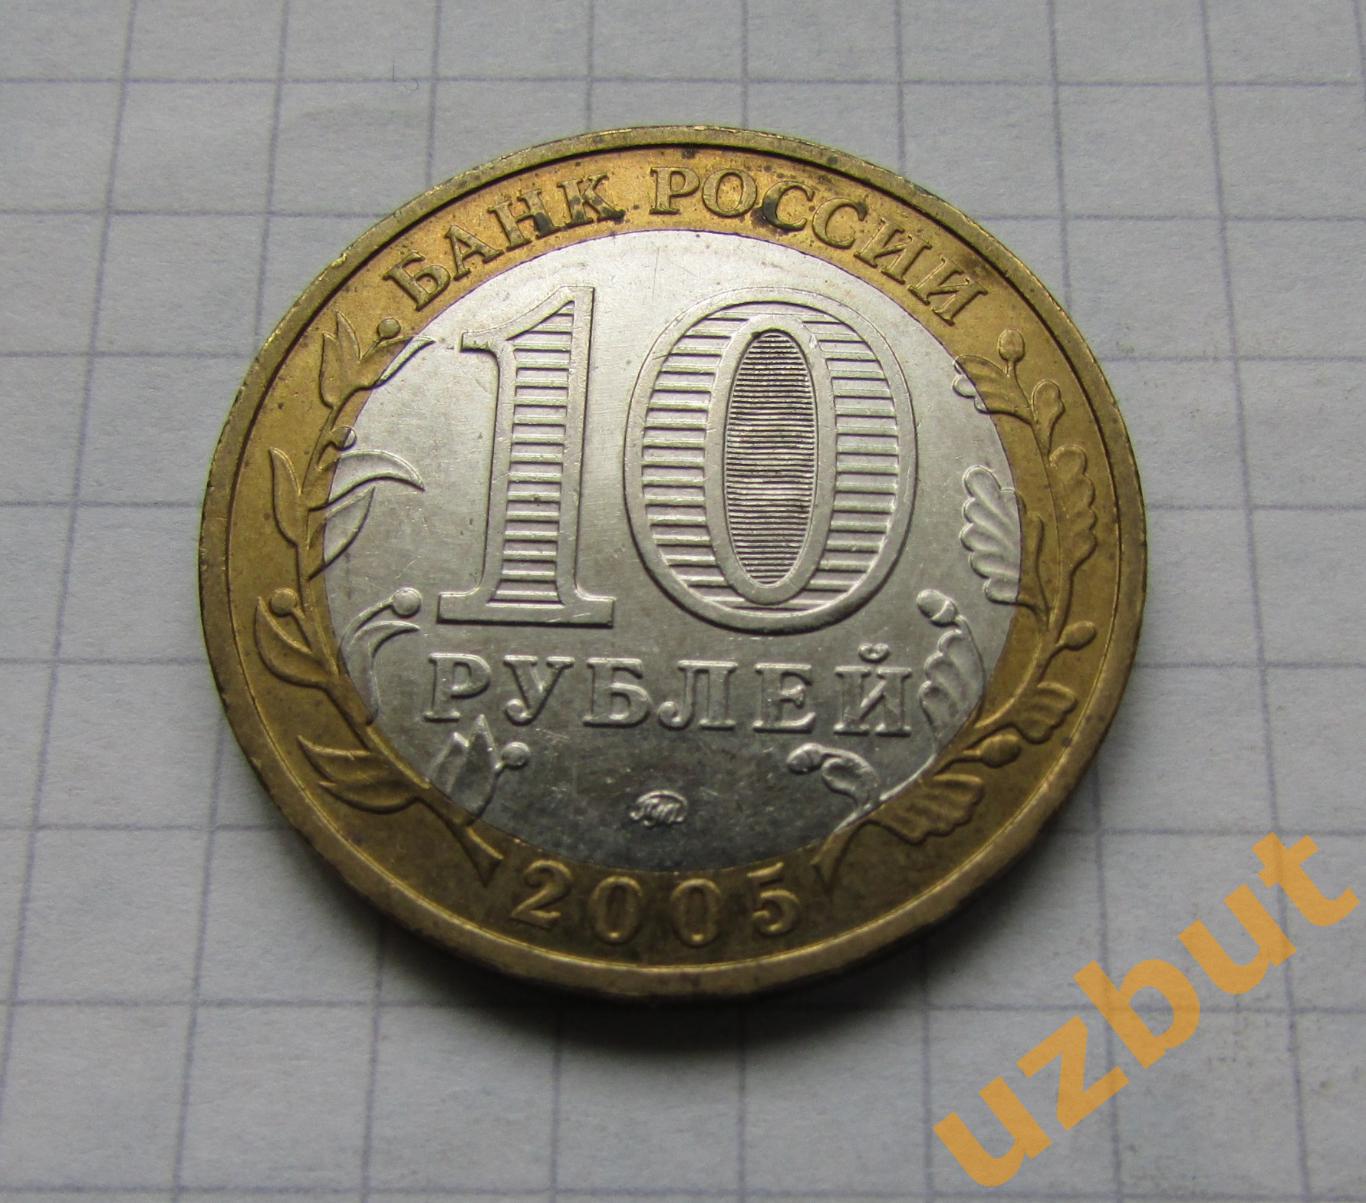 10 рублей РФ 2005 Победа 60 лет ммд (2) 1